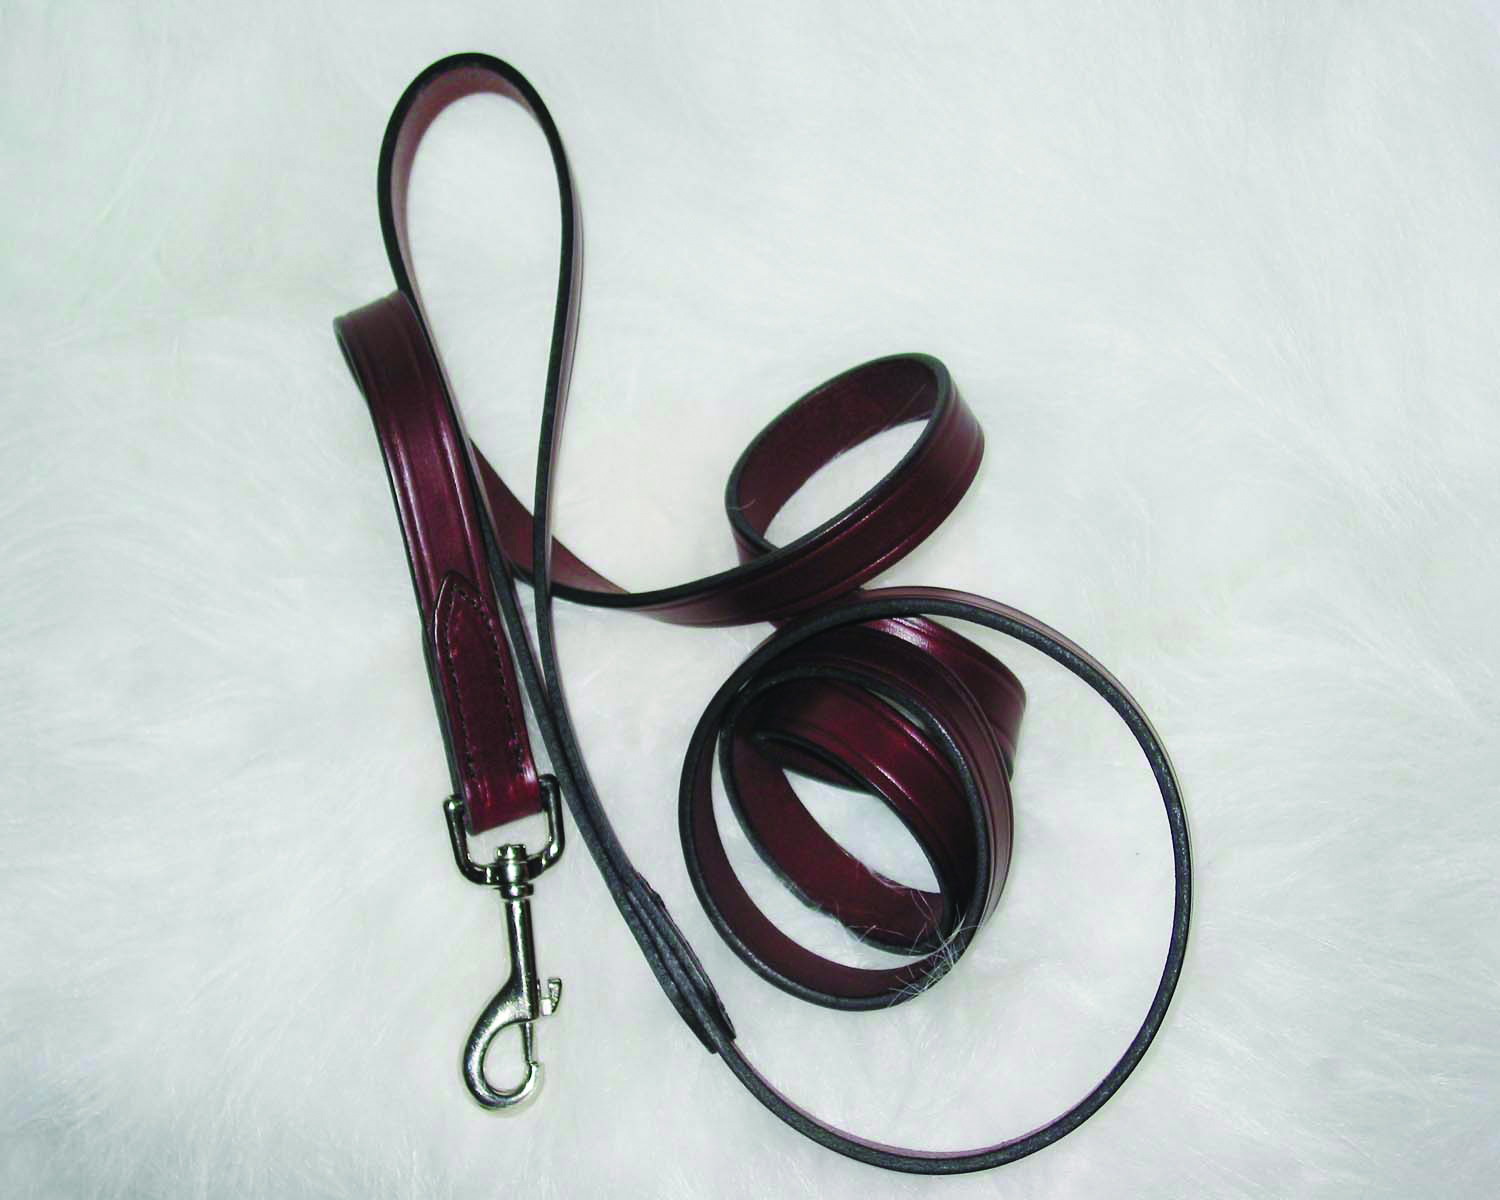 6' Medium Leather Leash - Burgundy